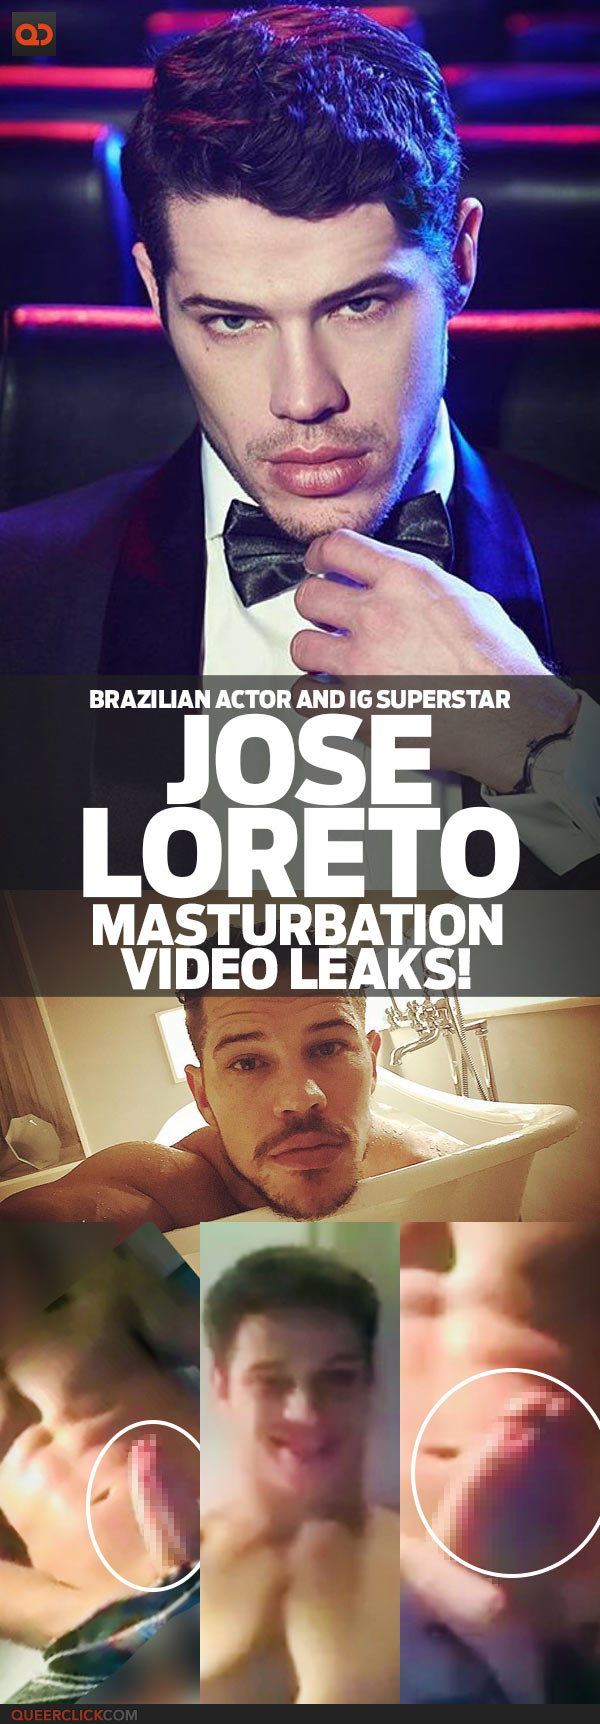 Jose Loreto, Brazilian Actor And IG Superstar, Masturbation Video Leaks!